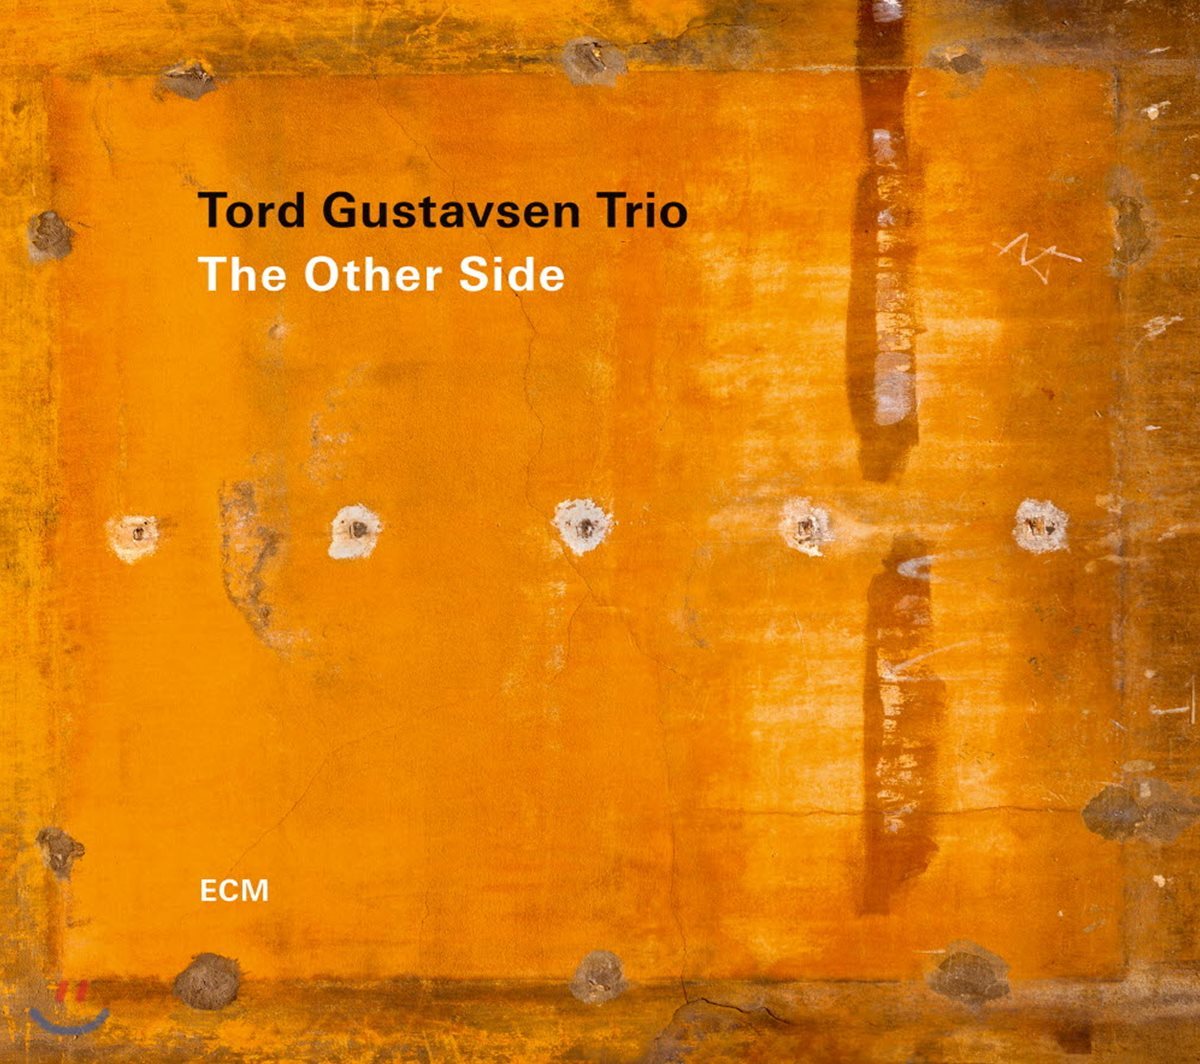 Tord Gustavsen Trio (토드 구스타브센 트리오) - The Other Side [LP]